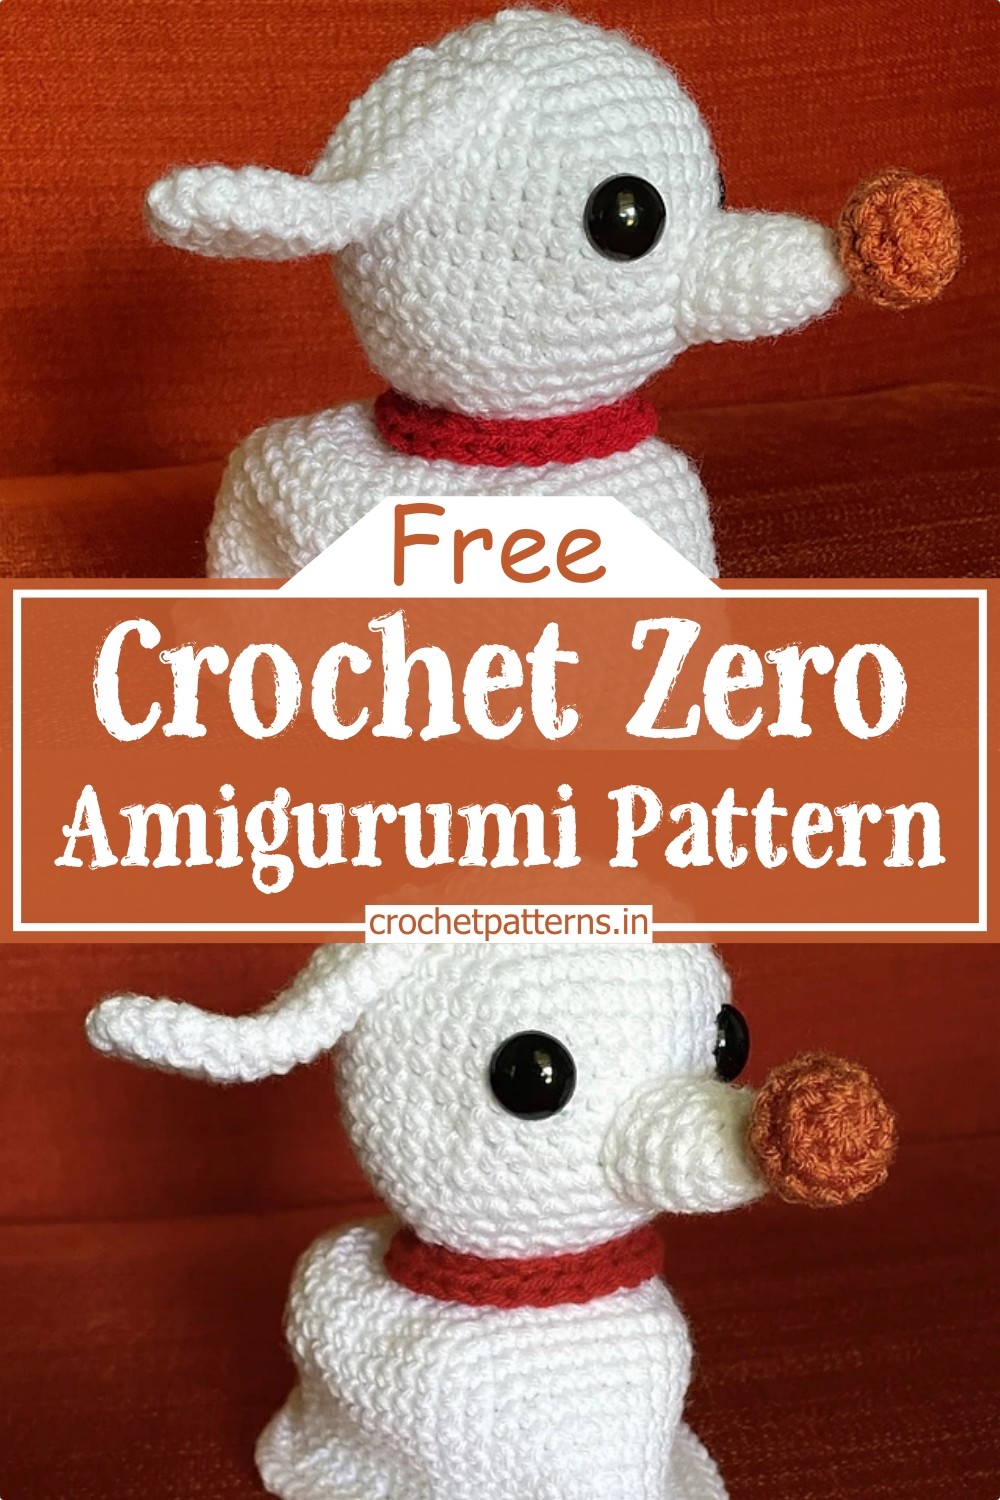 Crochet Zero Amigurumi Pattern